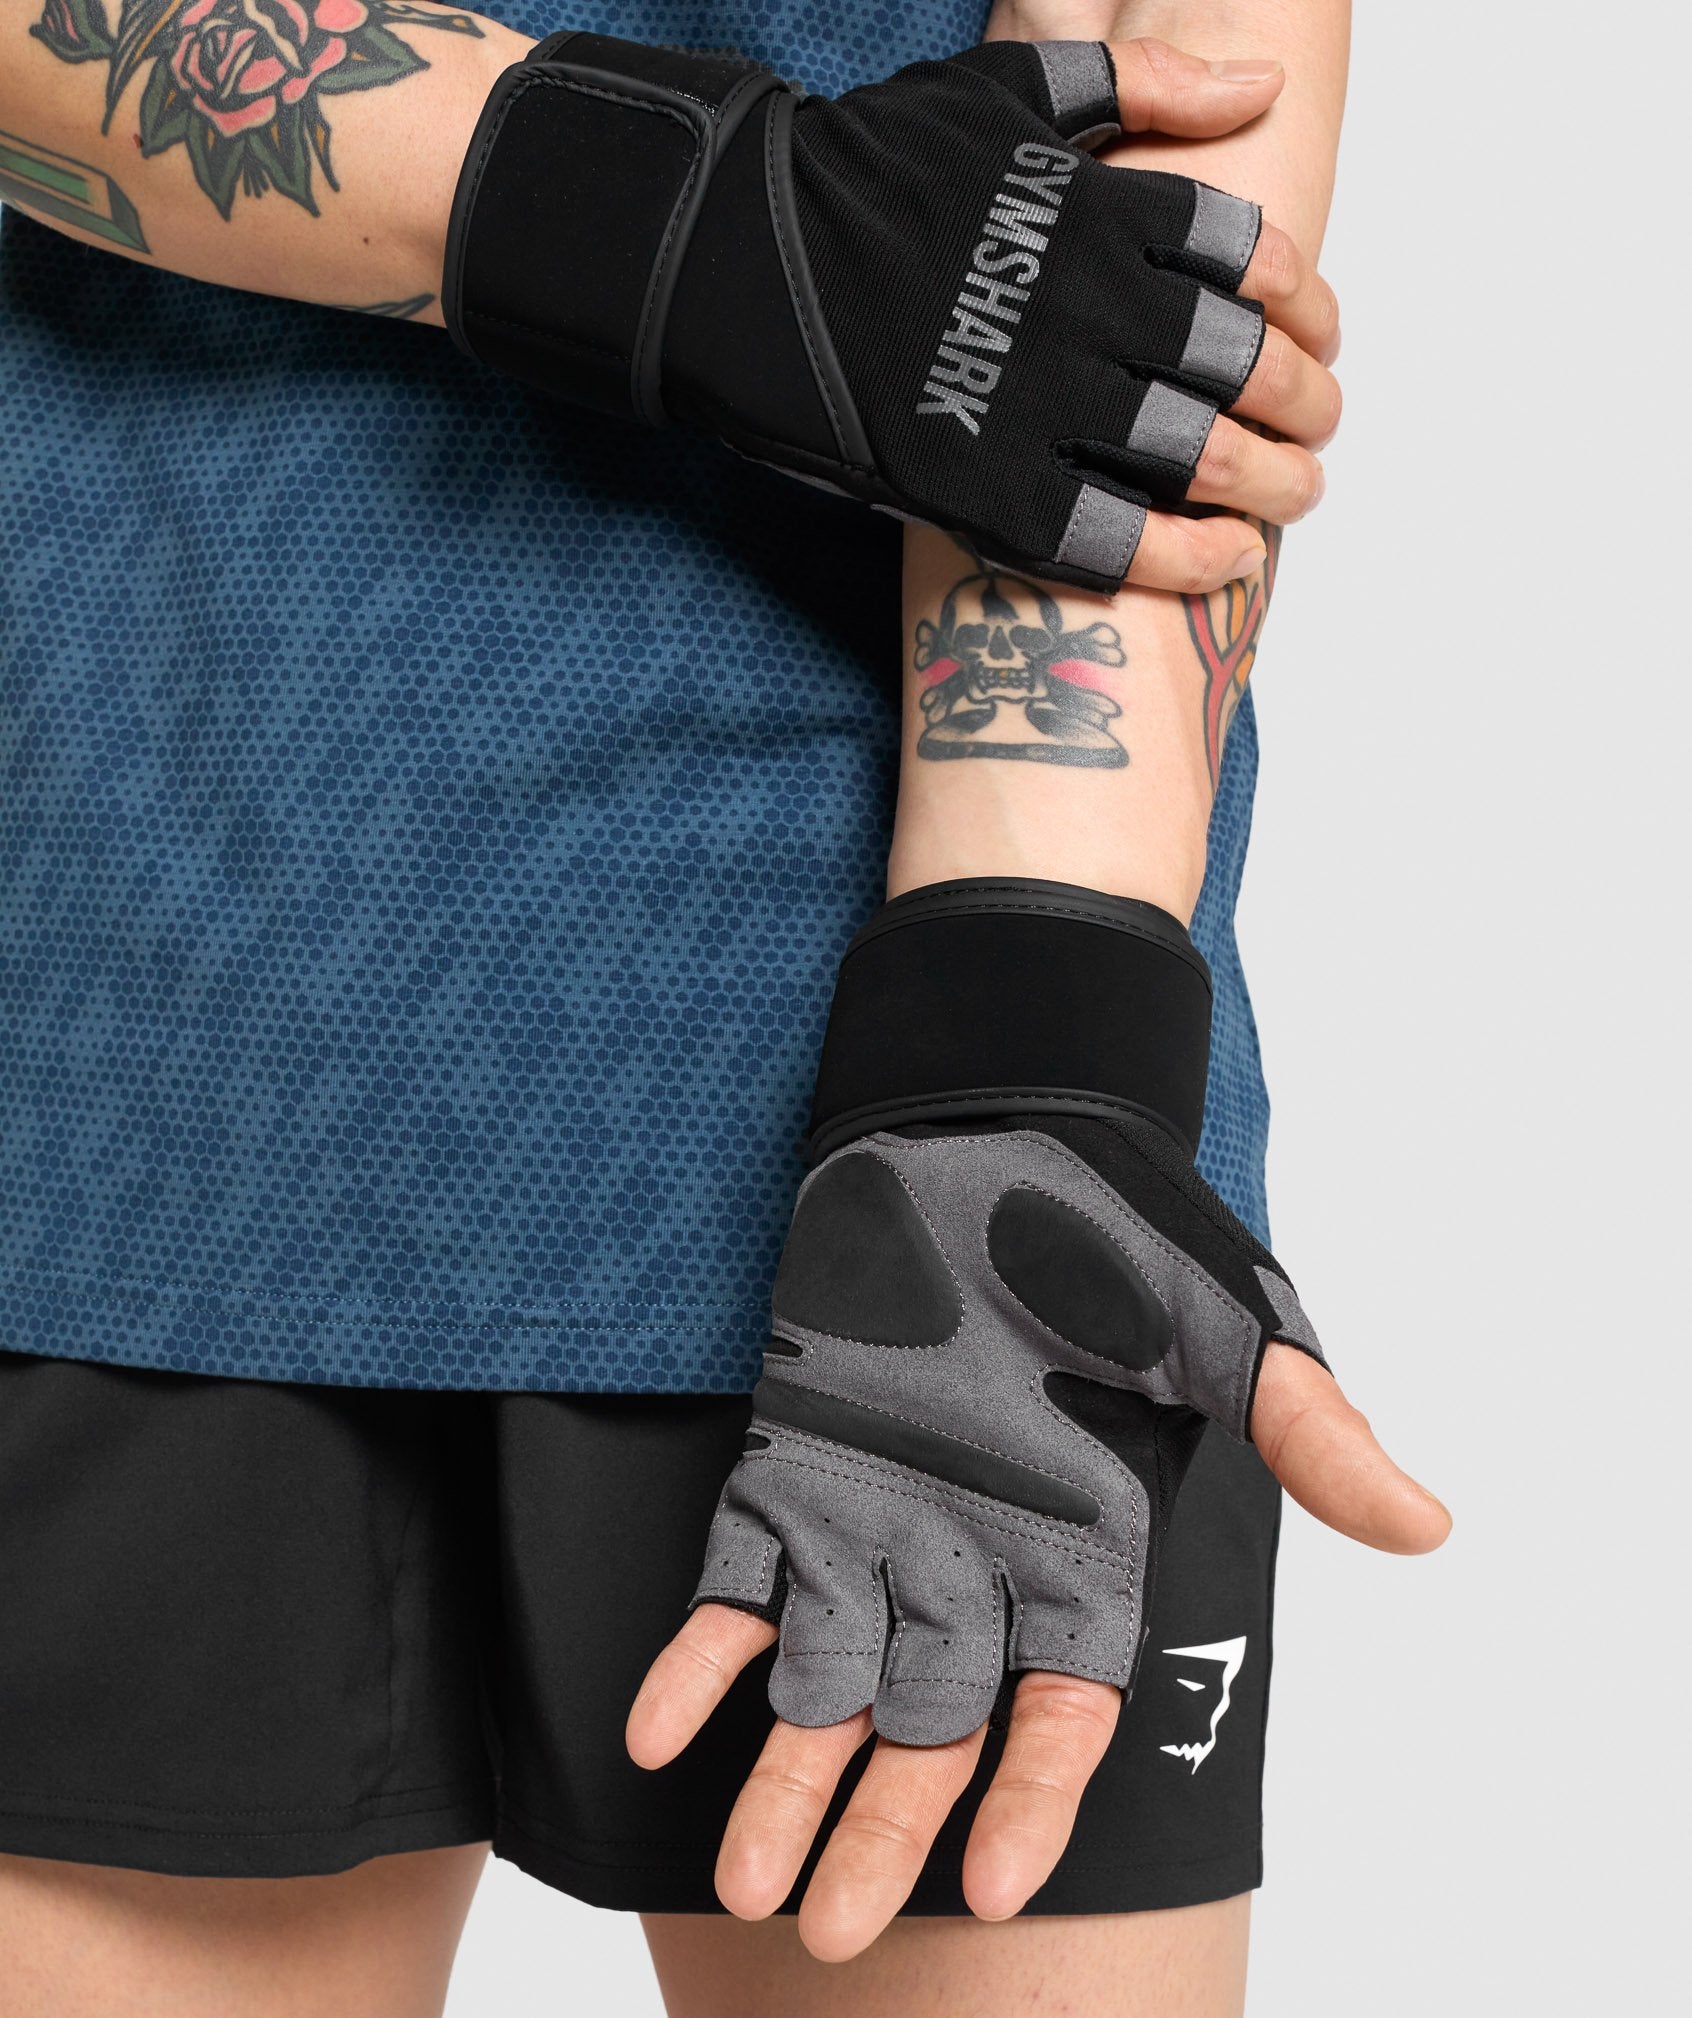 Gymshark Legacy Lifting Gloves - Black